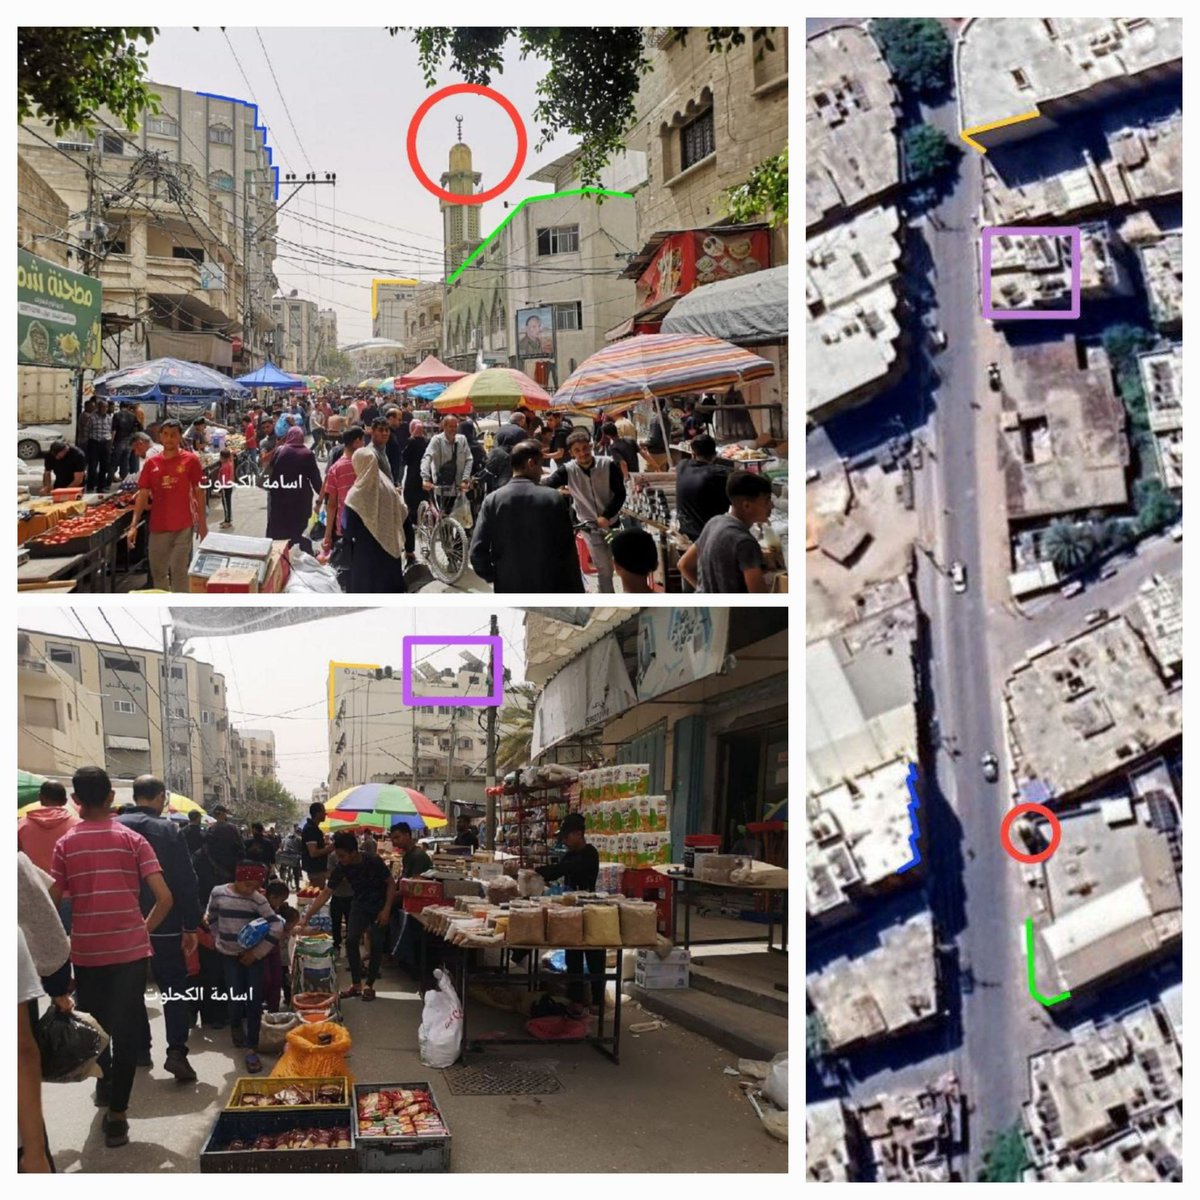 Geolocation | Plenty of groceries in the markets of Gaza City

Al Sahaba Street Market, Daraj, Gaza City, Northern Gaza Strip

Photo 1: 31.5135246, 34.4620330
Photo 2: 31.5130496, 34.4621972

@GeoConfirmed
@cogatonline 
#FamineGaza